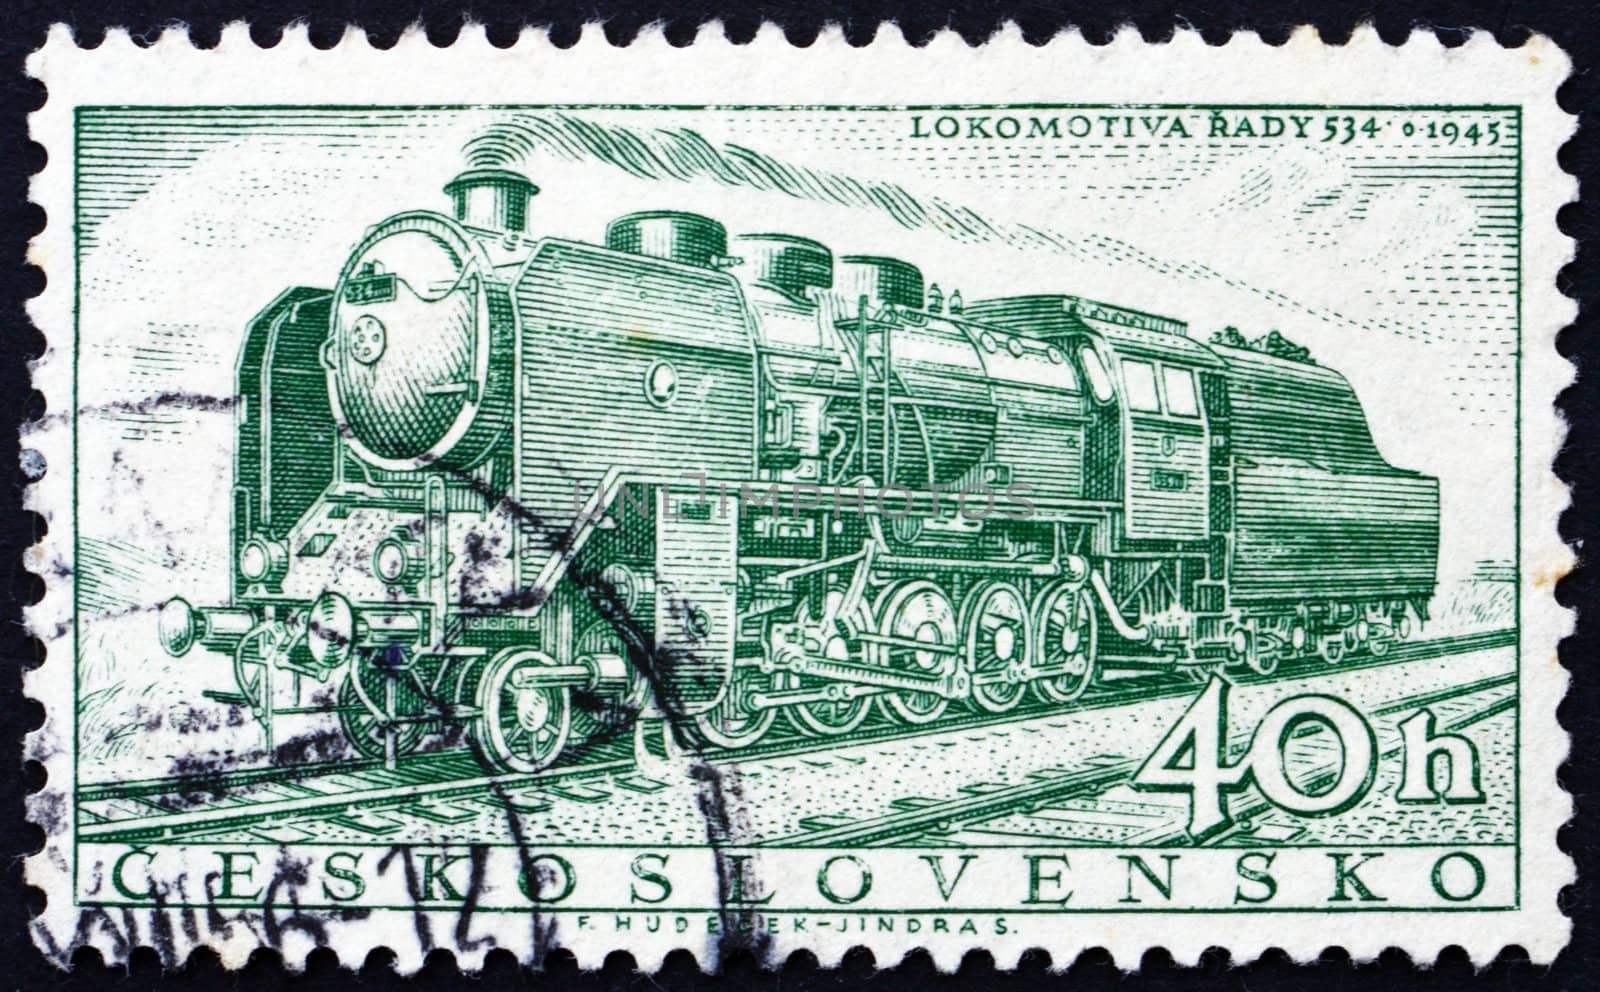 CZECHOSLOVAKIA - CIRCA 1956: a stamp printed in the Czechoslovakia shows Steam Locomotive, 1945, circa 1956